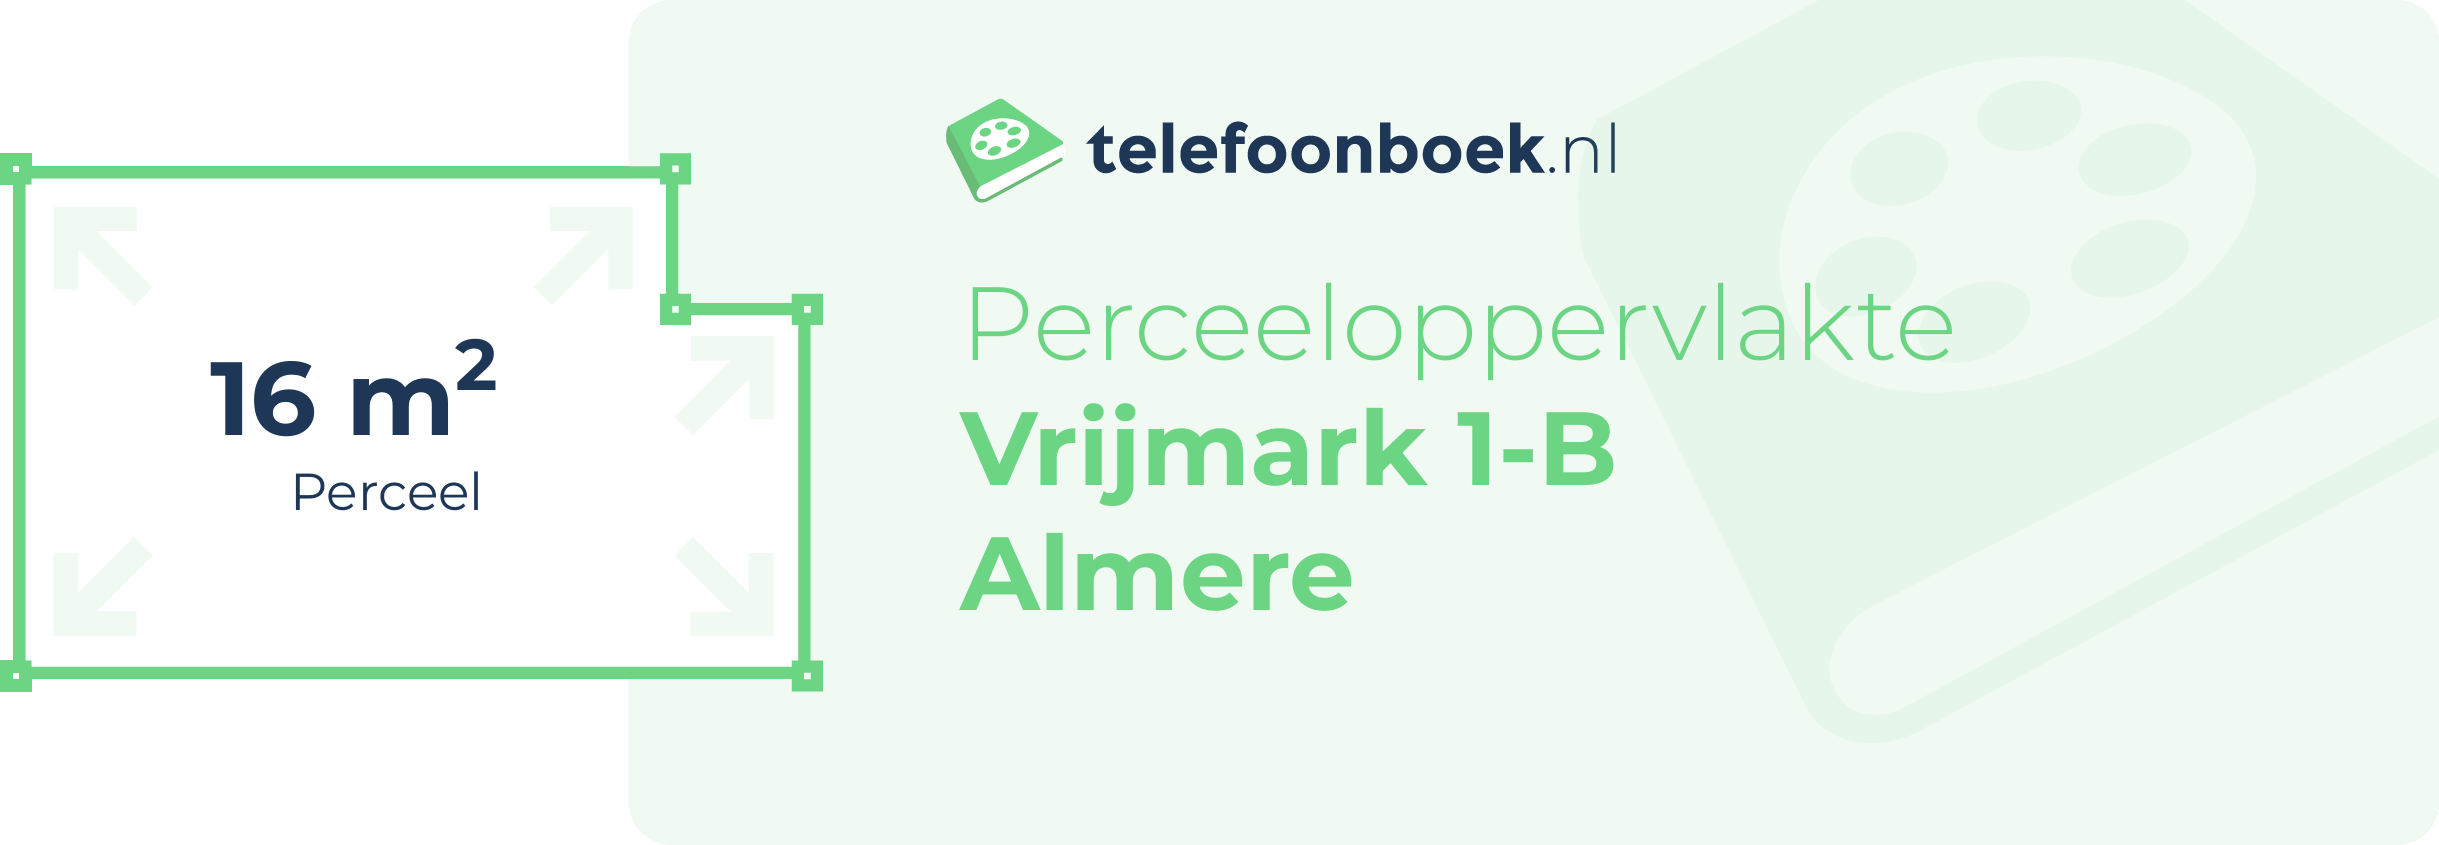 Perceeloppervlakte Vrijmark 1-B Almere